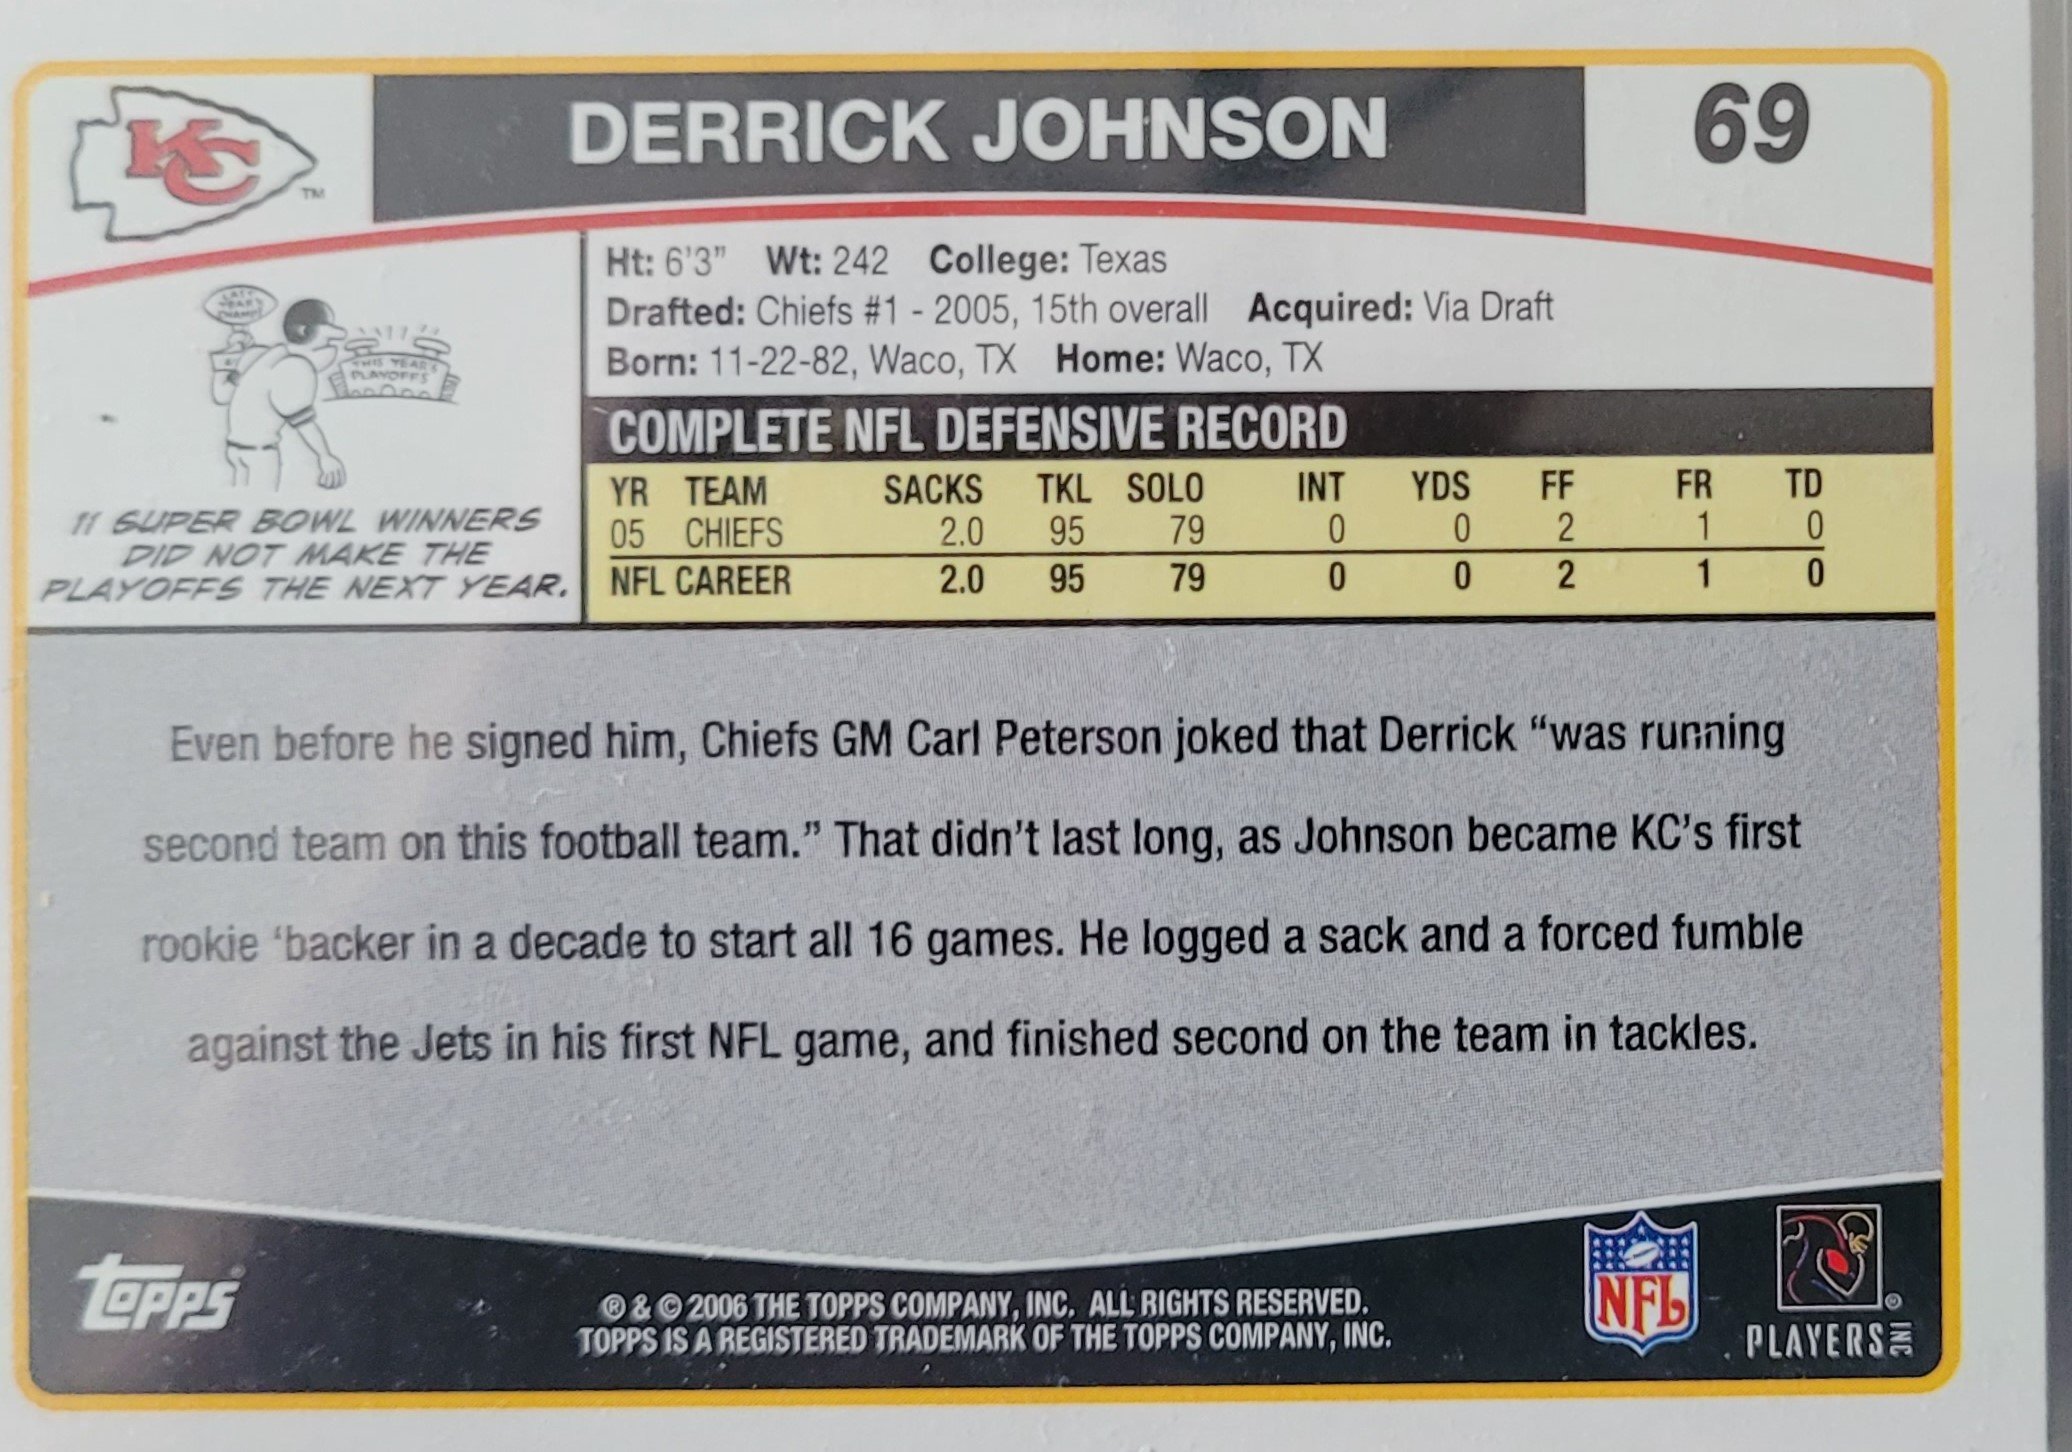 2004 Derrick Johnson 